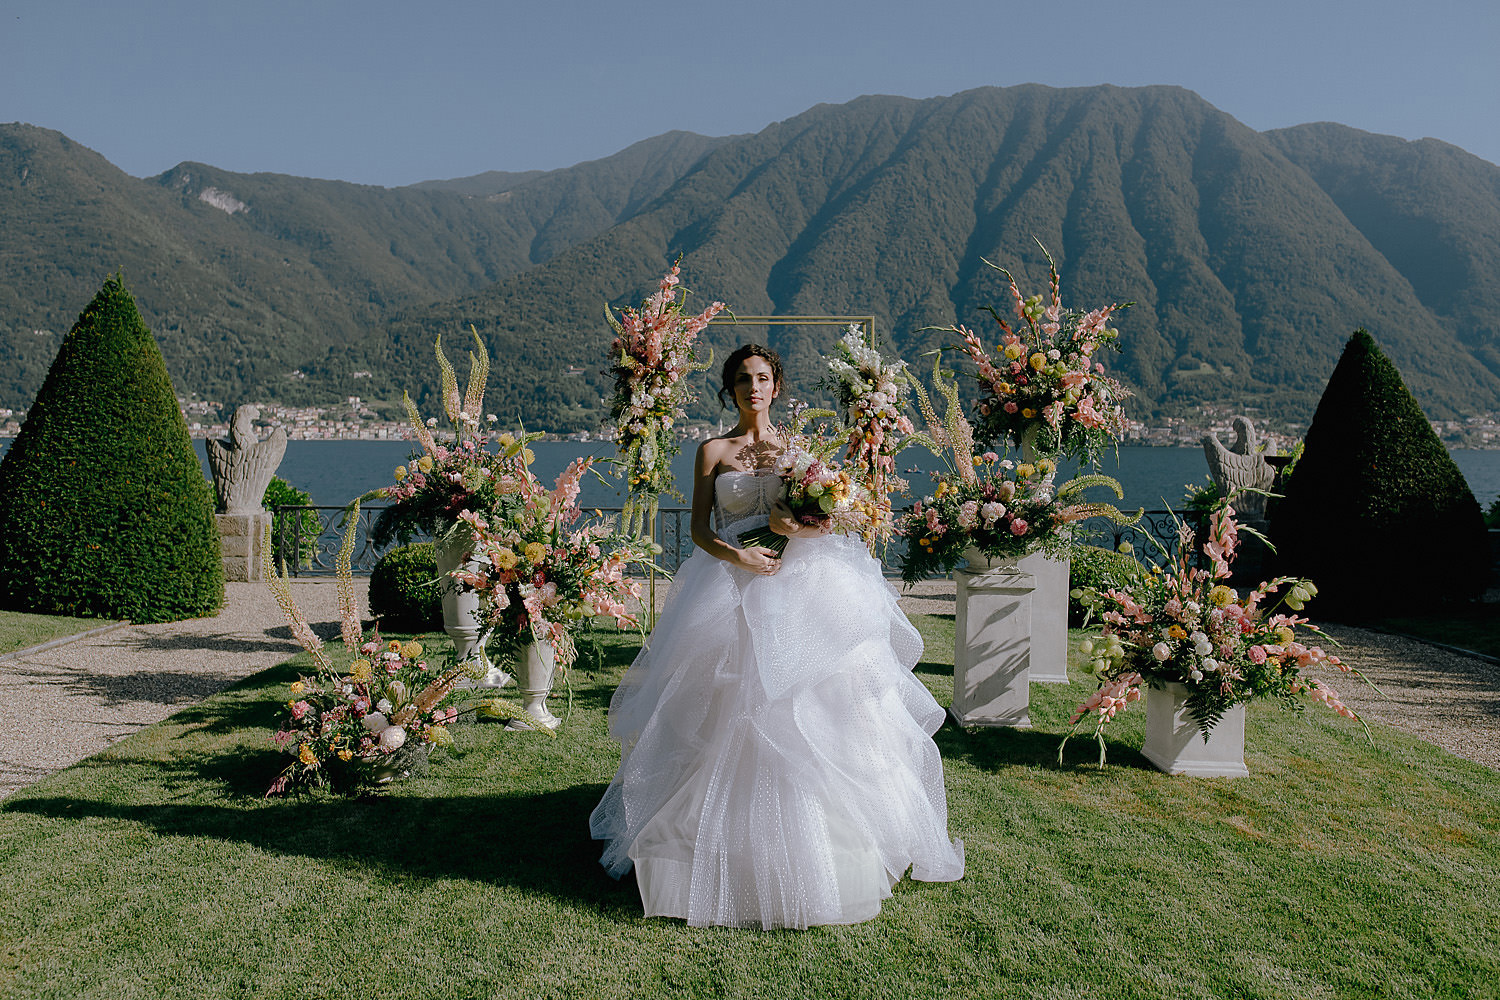 villa balbiano wedding photographer lake como lake side bride portraits flowers bouquet